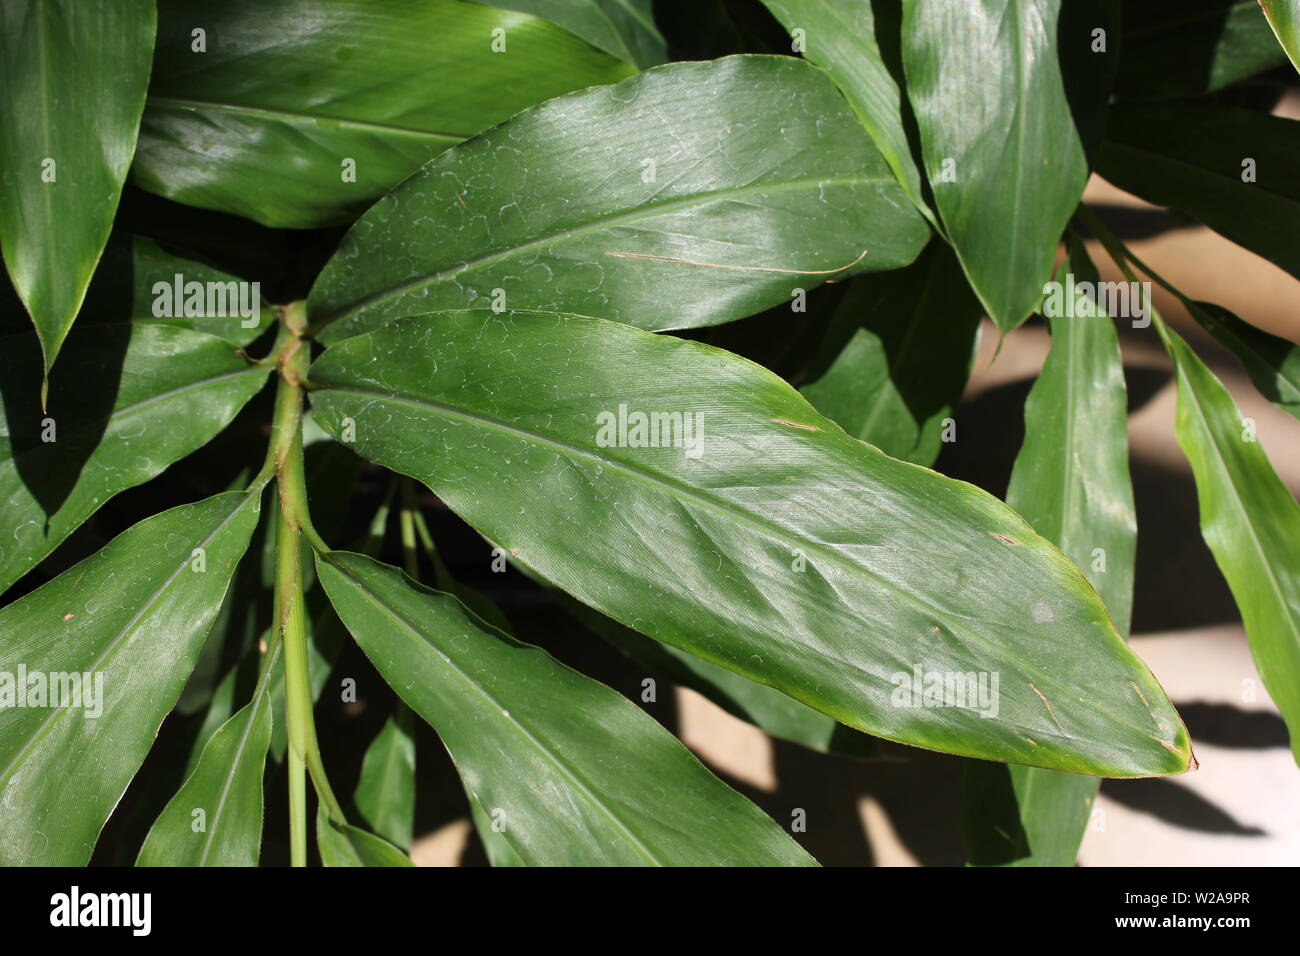 Lush green foliage of the spice plant cardamom, cardamon or cardamom, cardamomum, καρδάμωμον Stock Photo